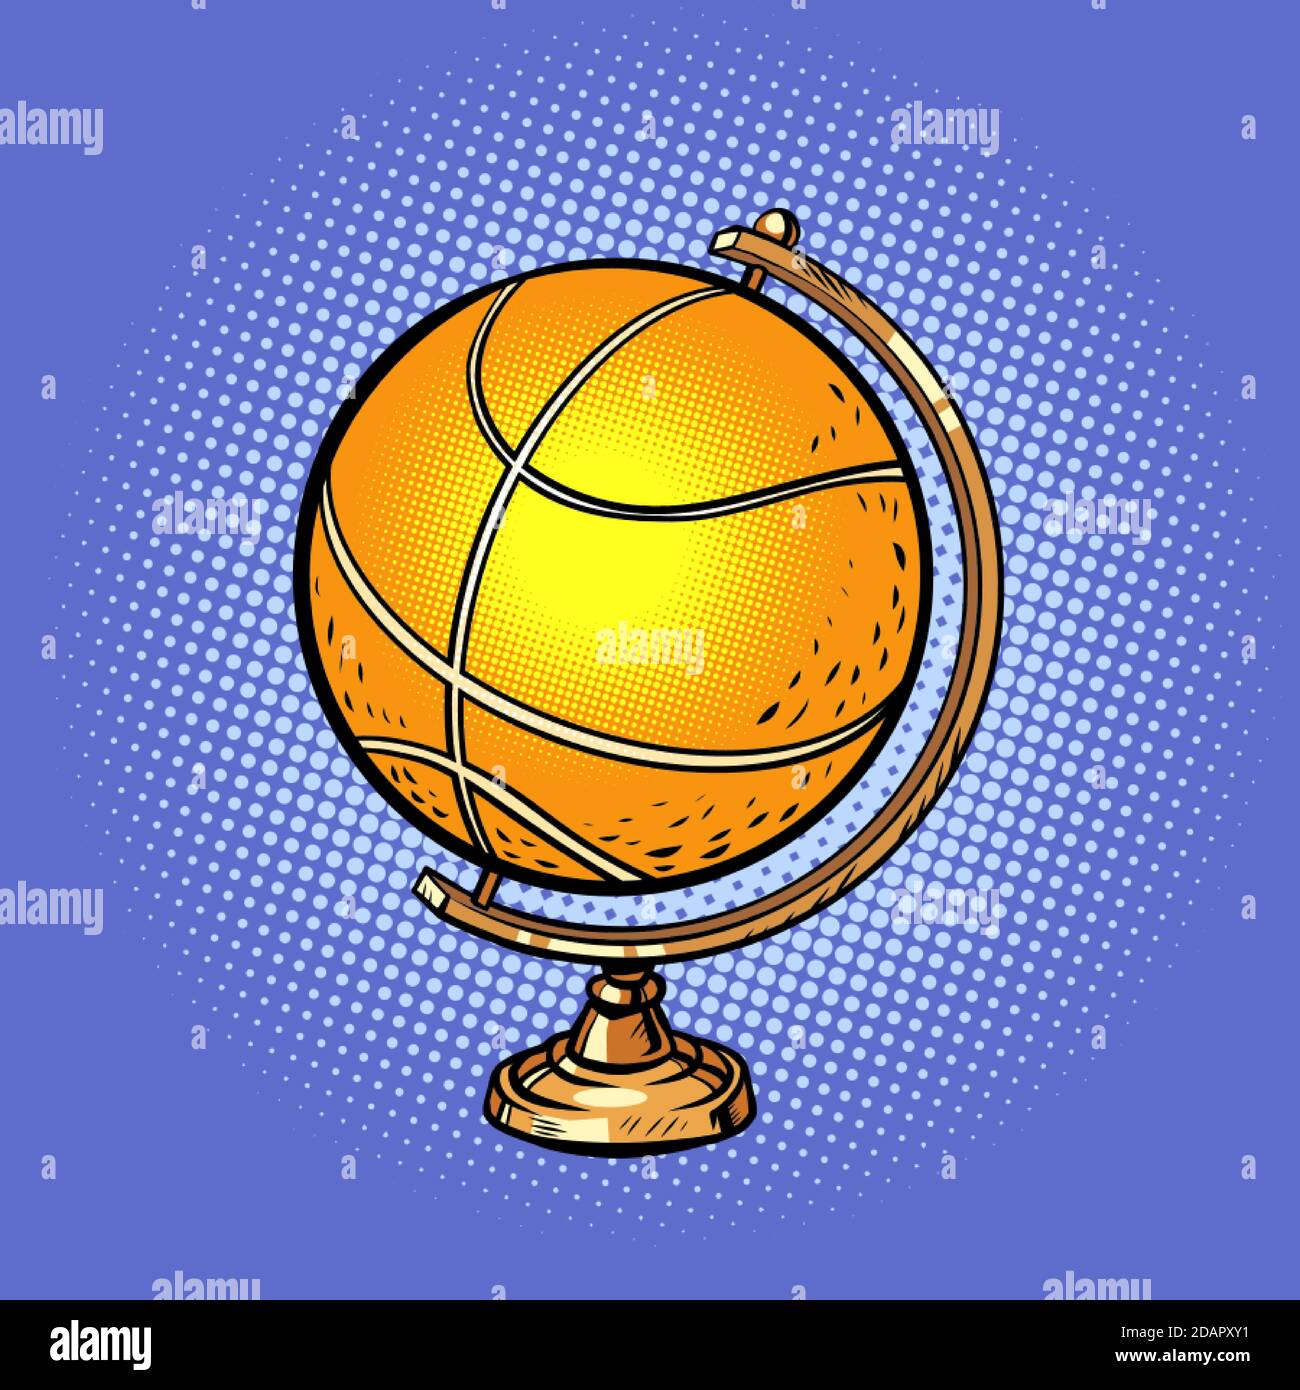 globe international basketball ball sports equipment Stock Vector